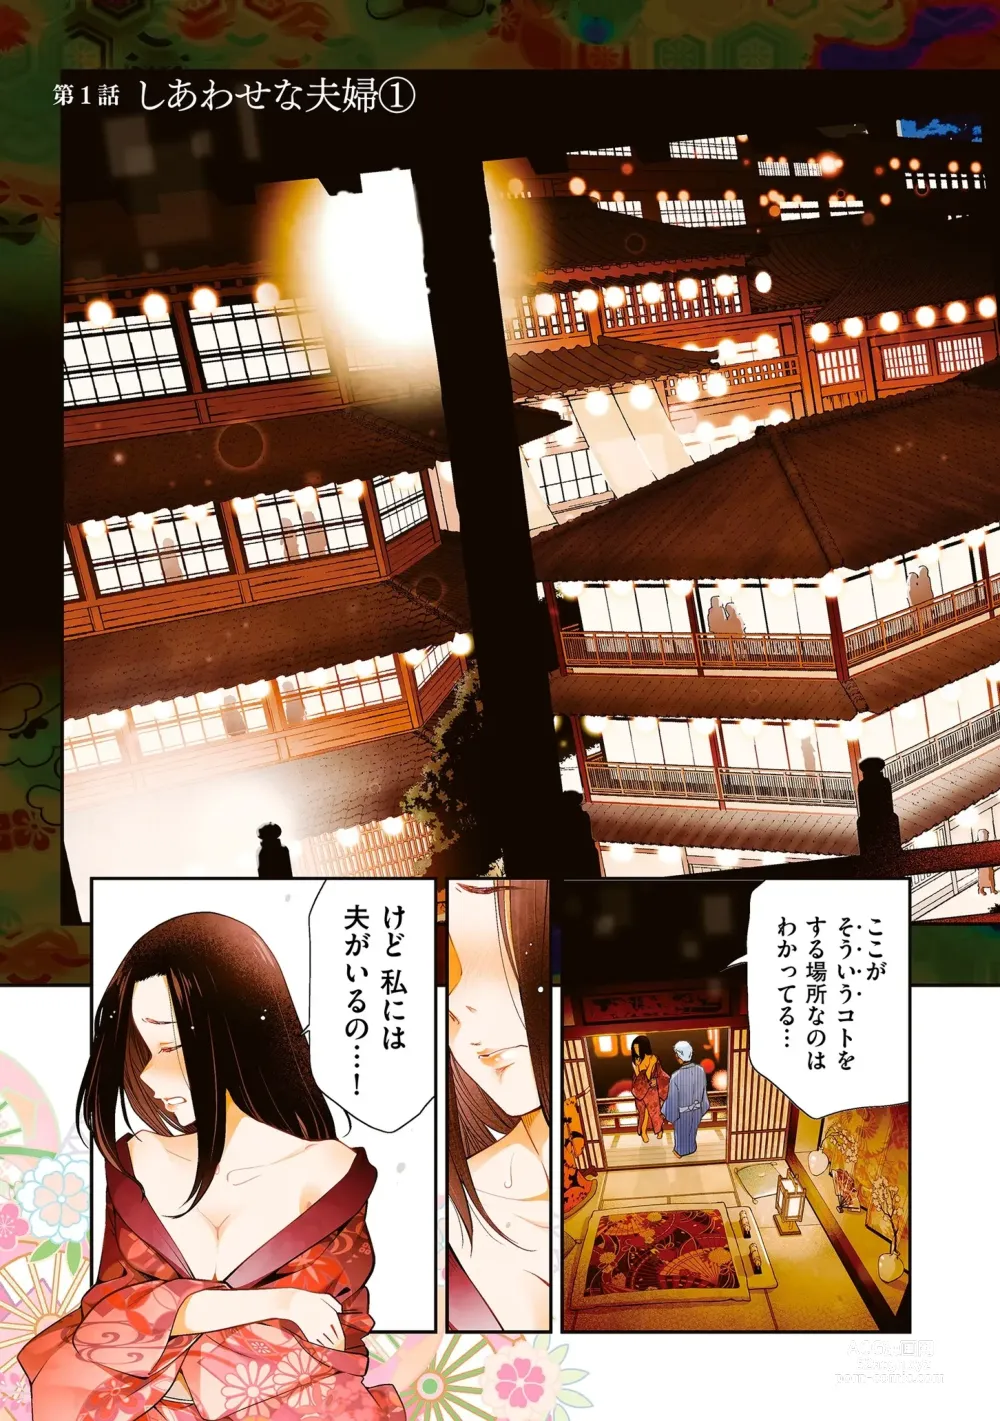 Page 5 of manga Shiawase no Kuni